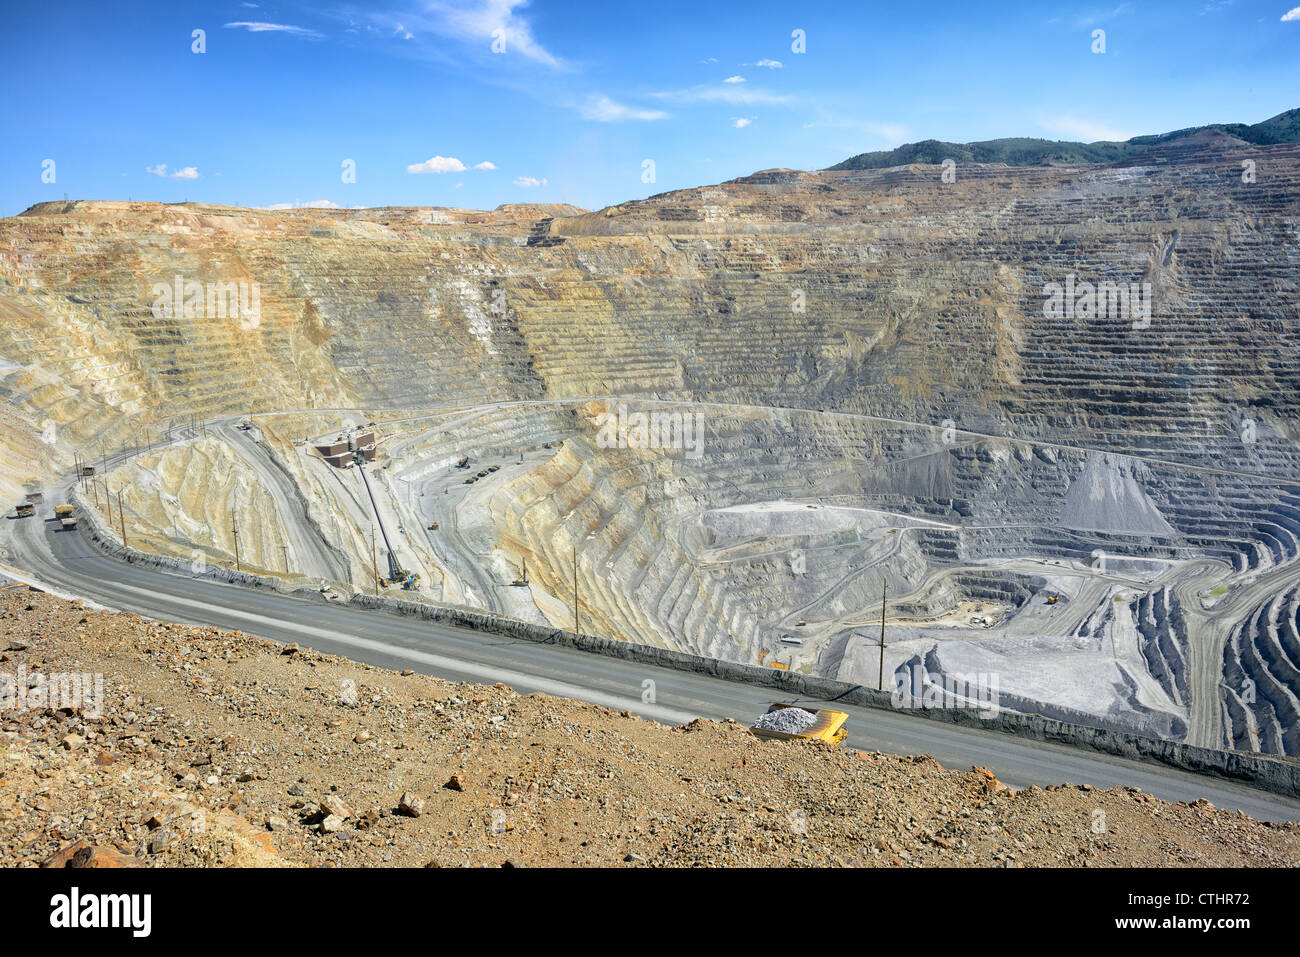 Bingham Canyon Mine Aka Kennecott Copper Mine An Open Pit Mining Southwest Of Salt Lake City Utah Usa Stock Photo Alamy